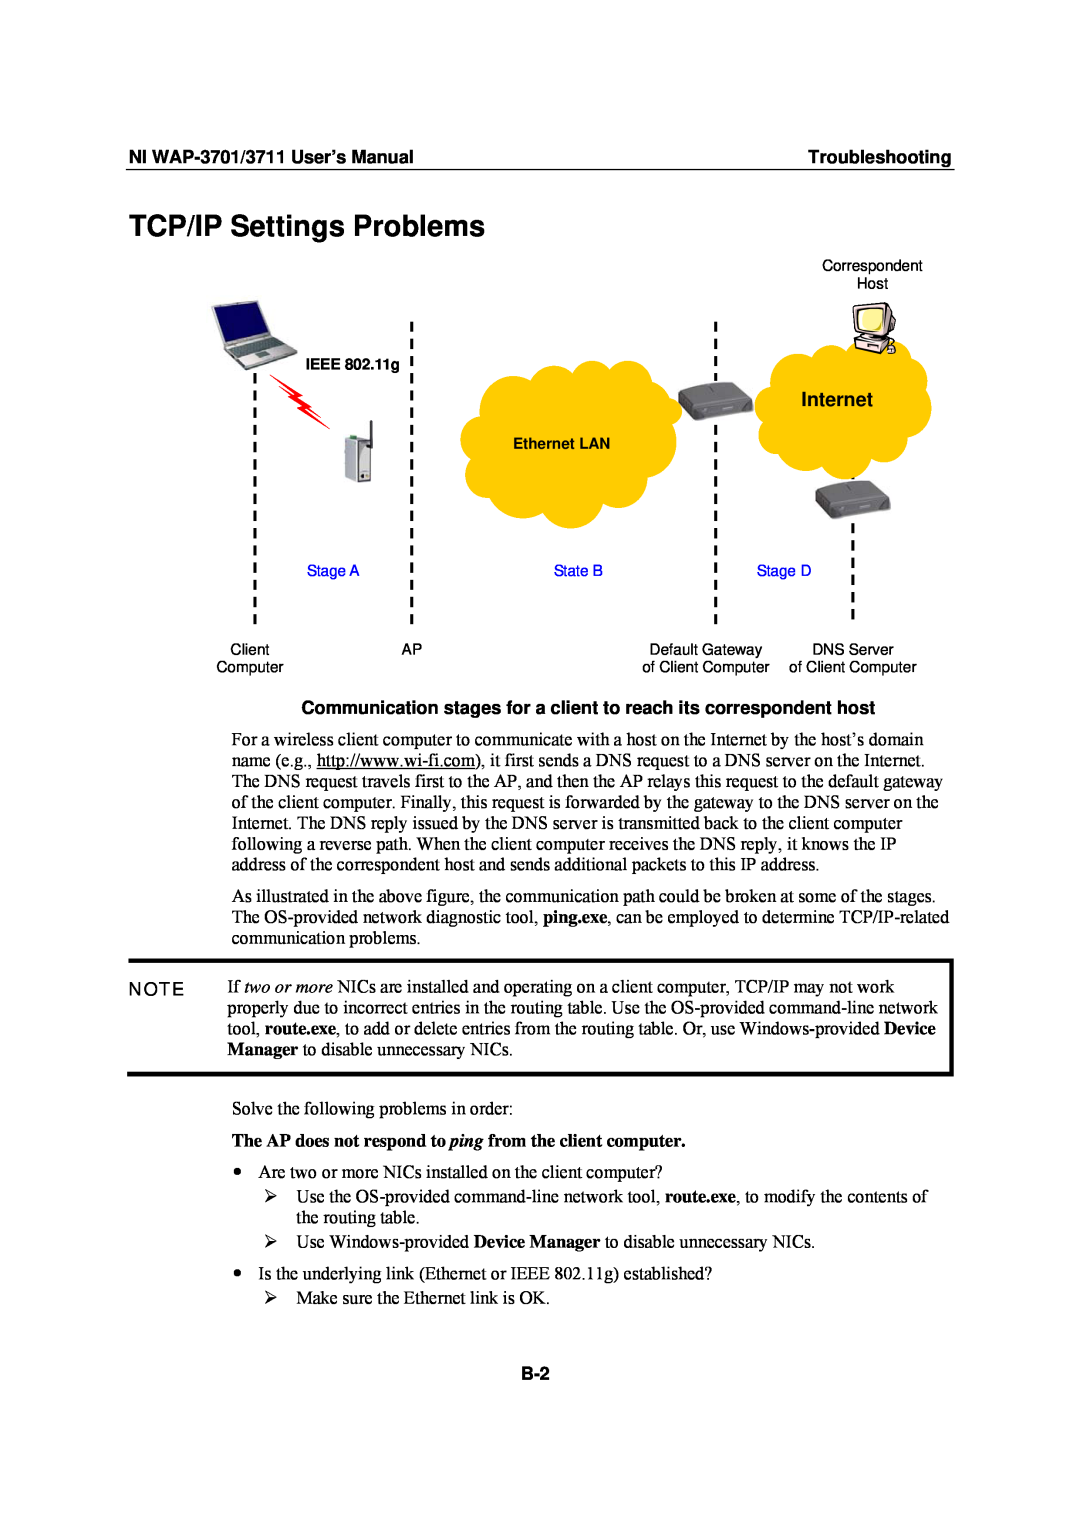 National Instruments WAP-3711 TCP/IP Settings Problems, Internet, NI WAP-3701/3711 User’s Manual, Troubleshooting 